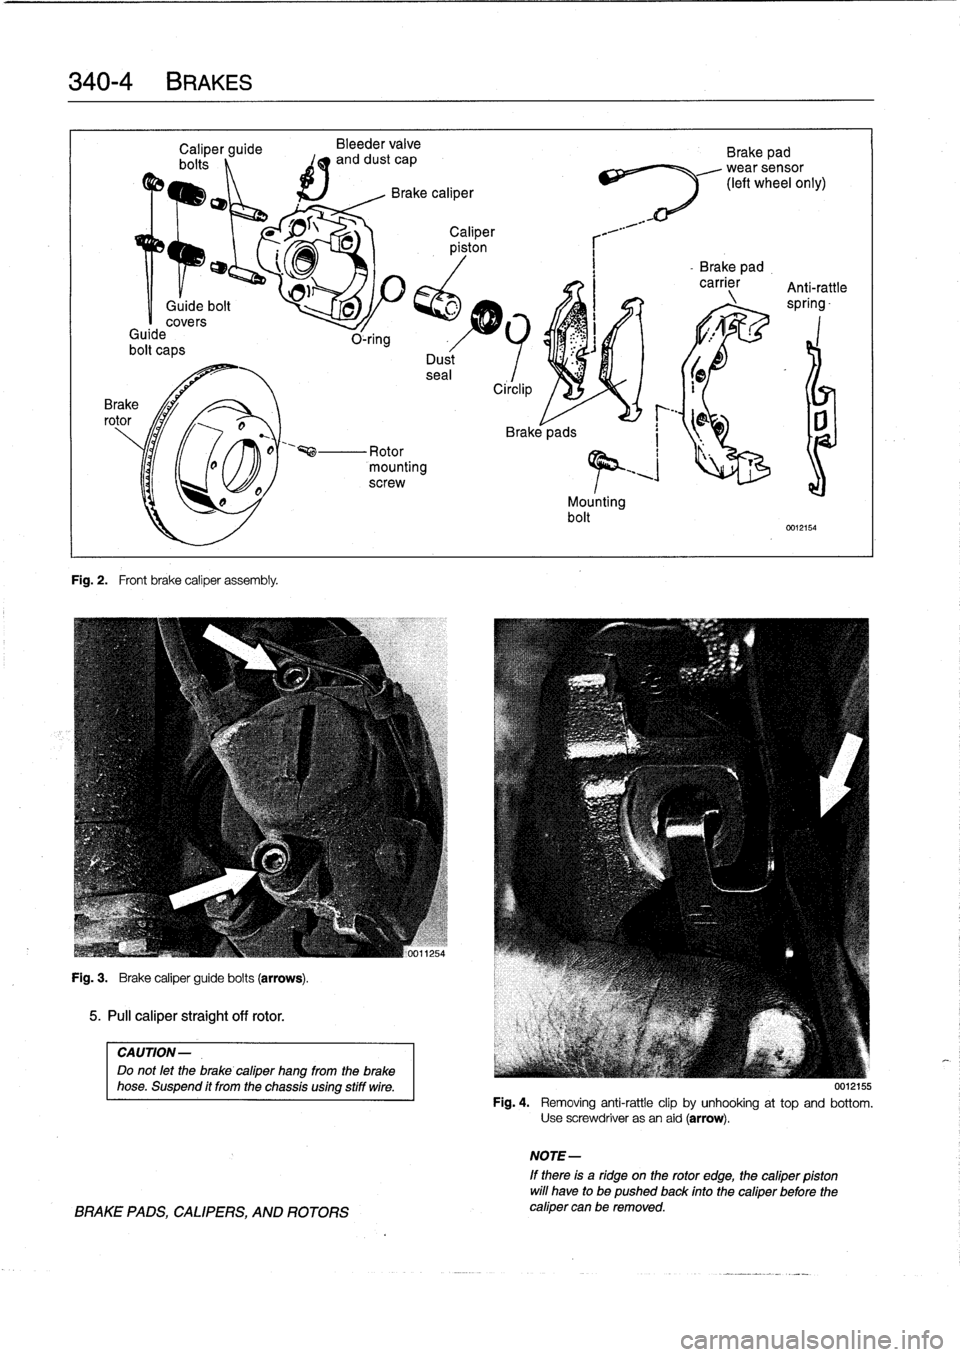 BMW 323i 1993 E36 Owners Manual 
340-
4
BRAKES

Fig
.
2
.

	

Front
brake
caliper
assembly
.

Bleeder
valve
and
dust
cap

Mounting
bolt

Brake
pad
wearsensor
(left
wheel
only)

-
Brake
pad
.
carrier
Anti-rattle
^_
spring-

0012154

